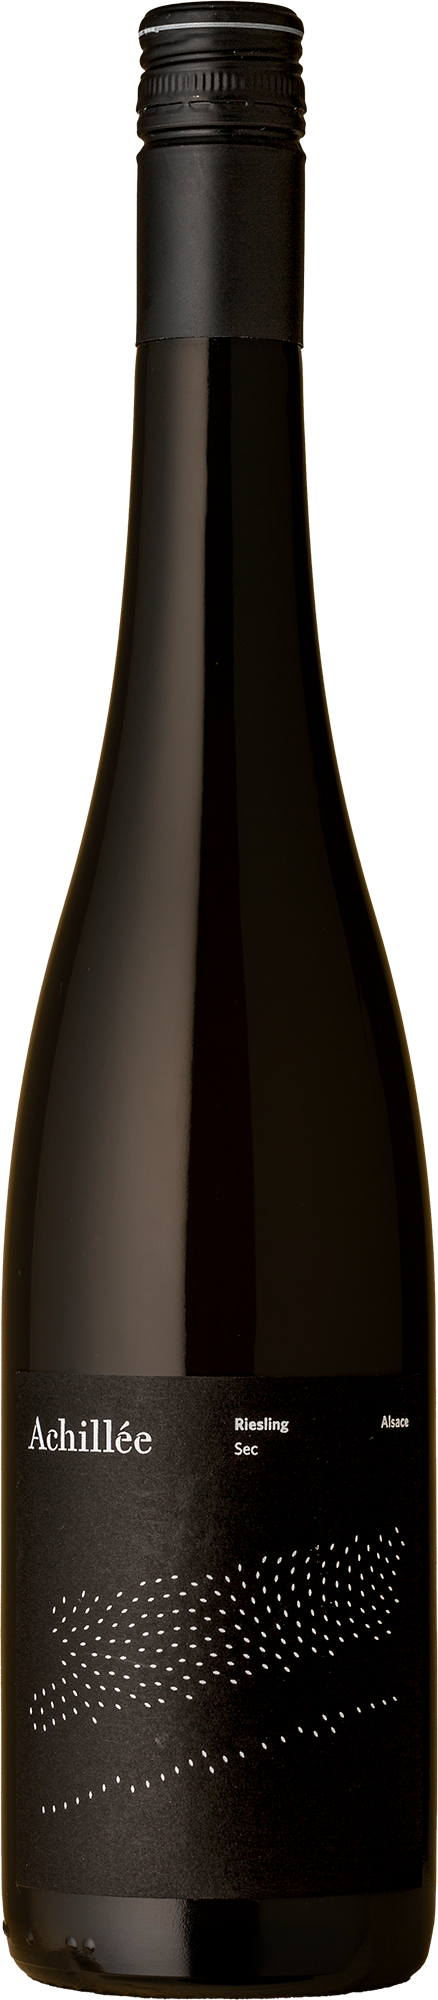 Domaine Achillée - Alsace Riesling 2021 White Wine